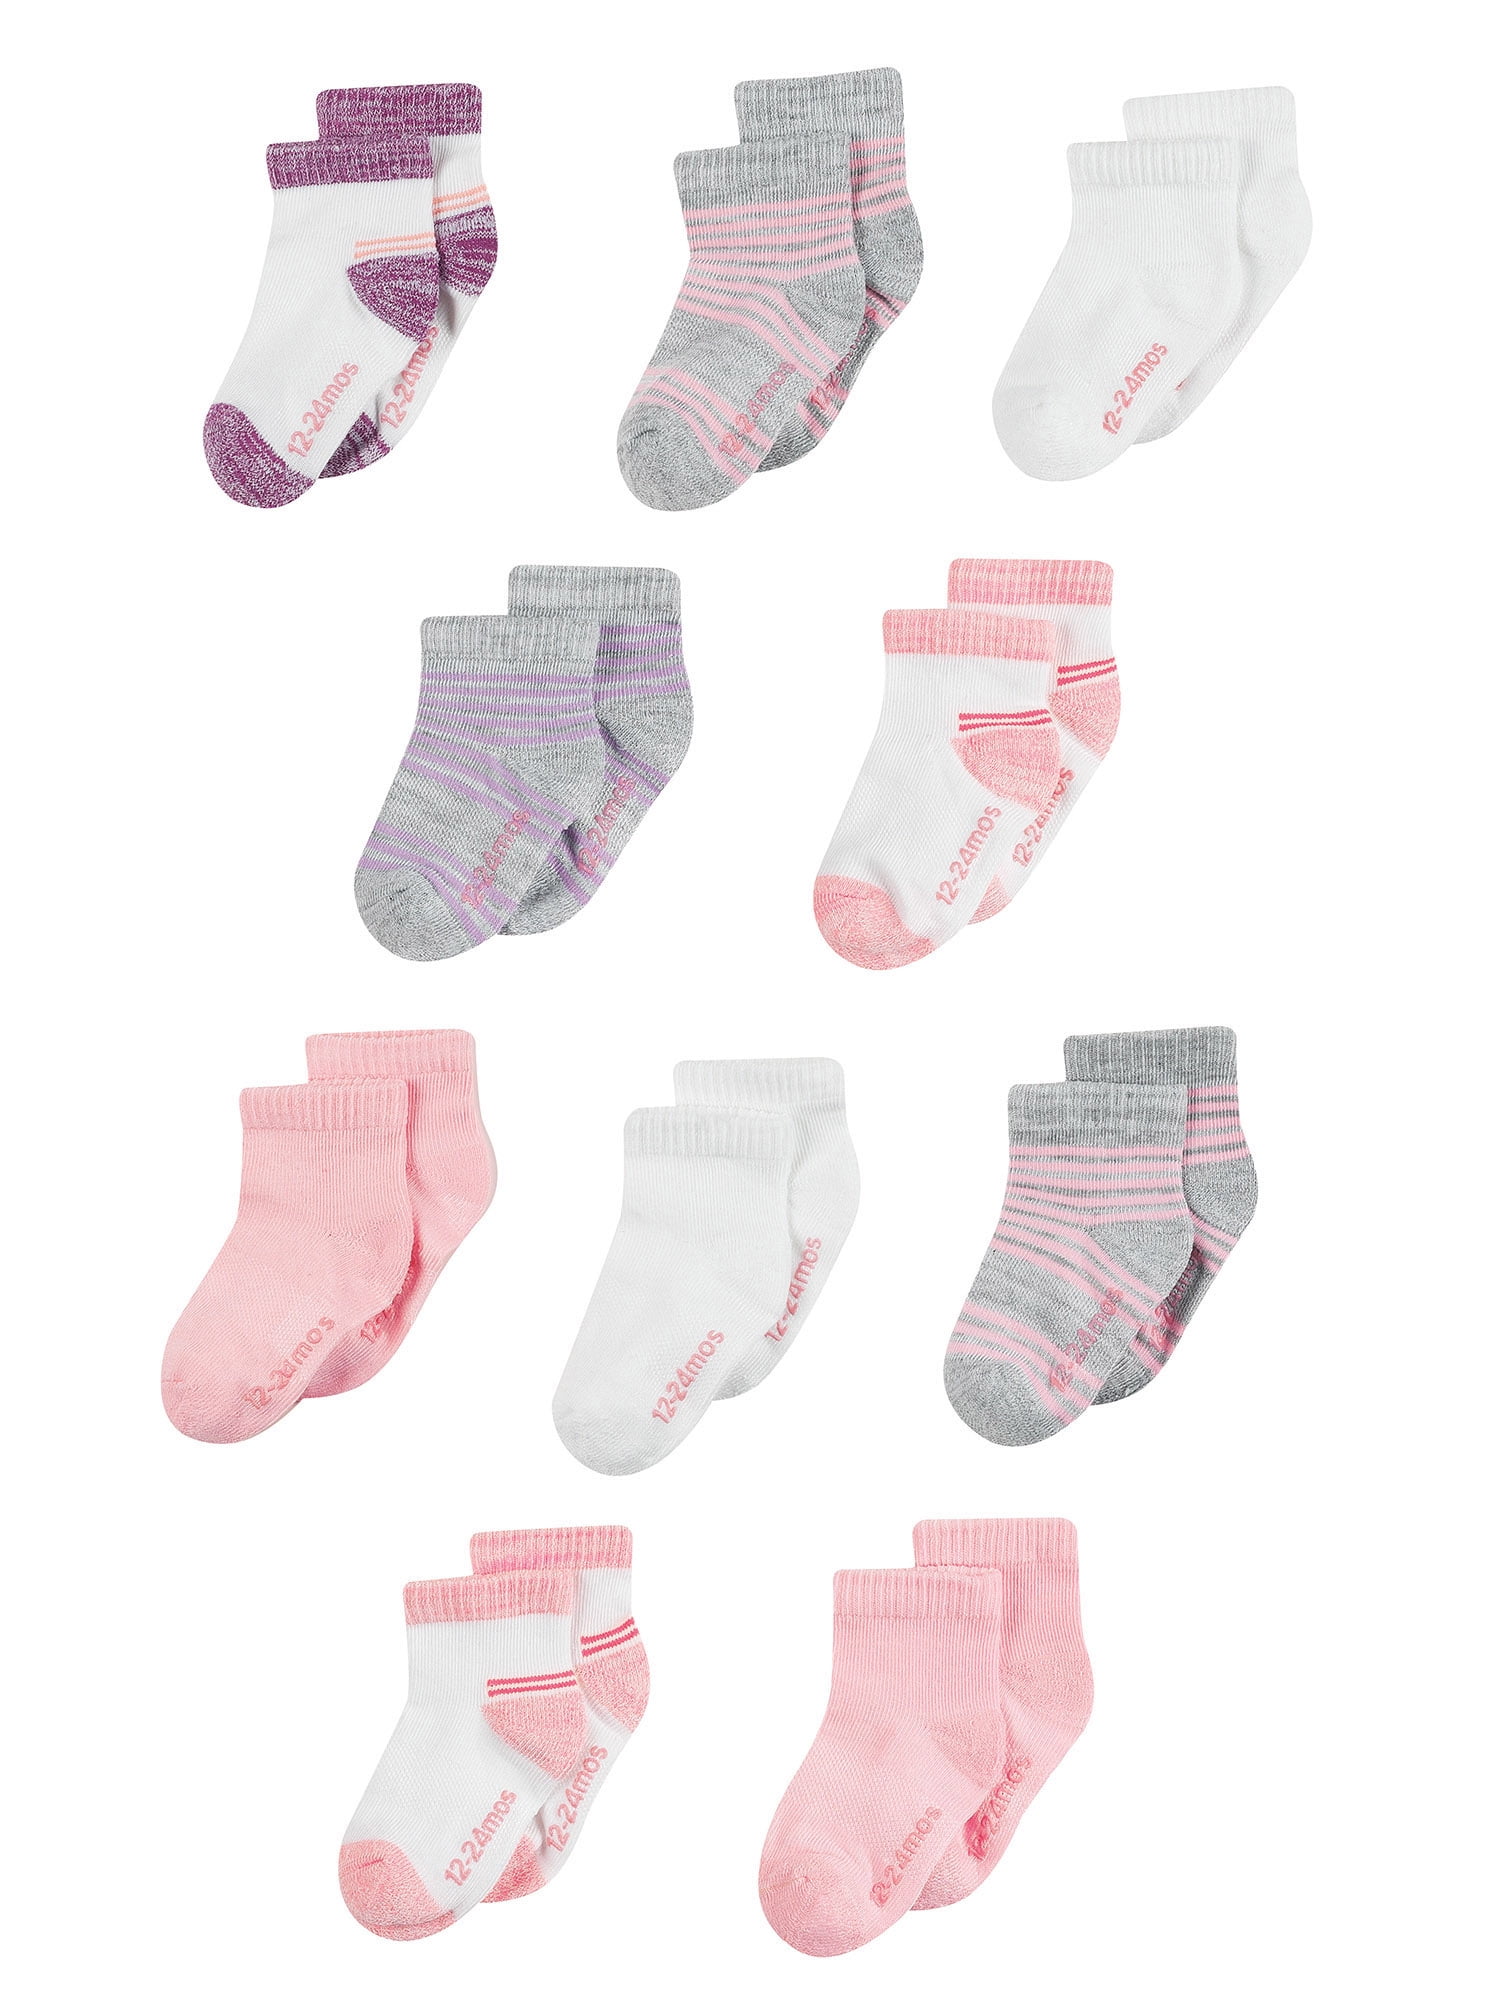 2 Pack Baby Boy Girl Turnover Socks Ankle Blue Pink White 0-3 Months 